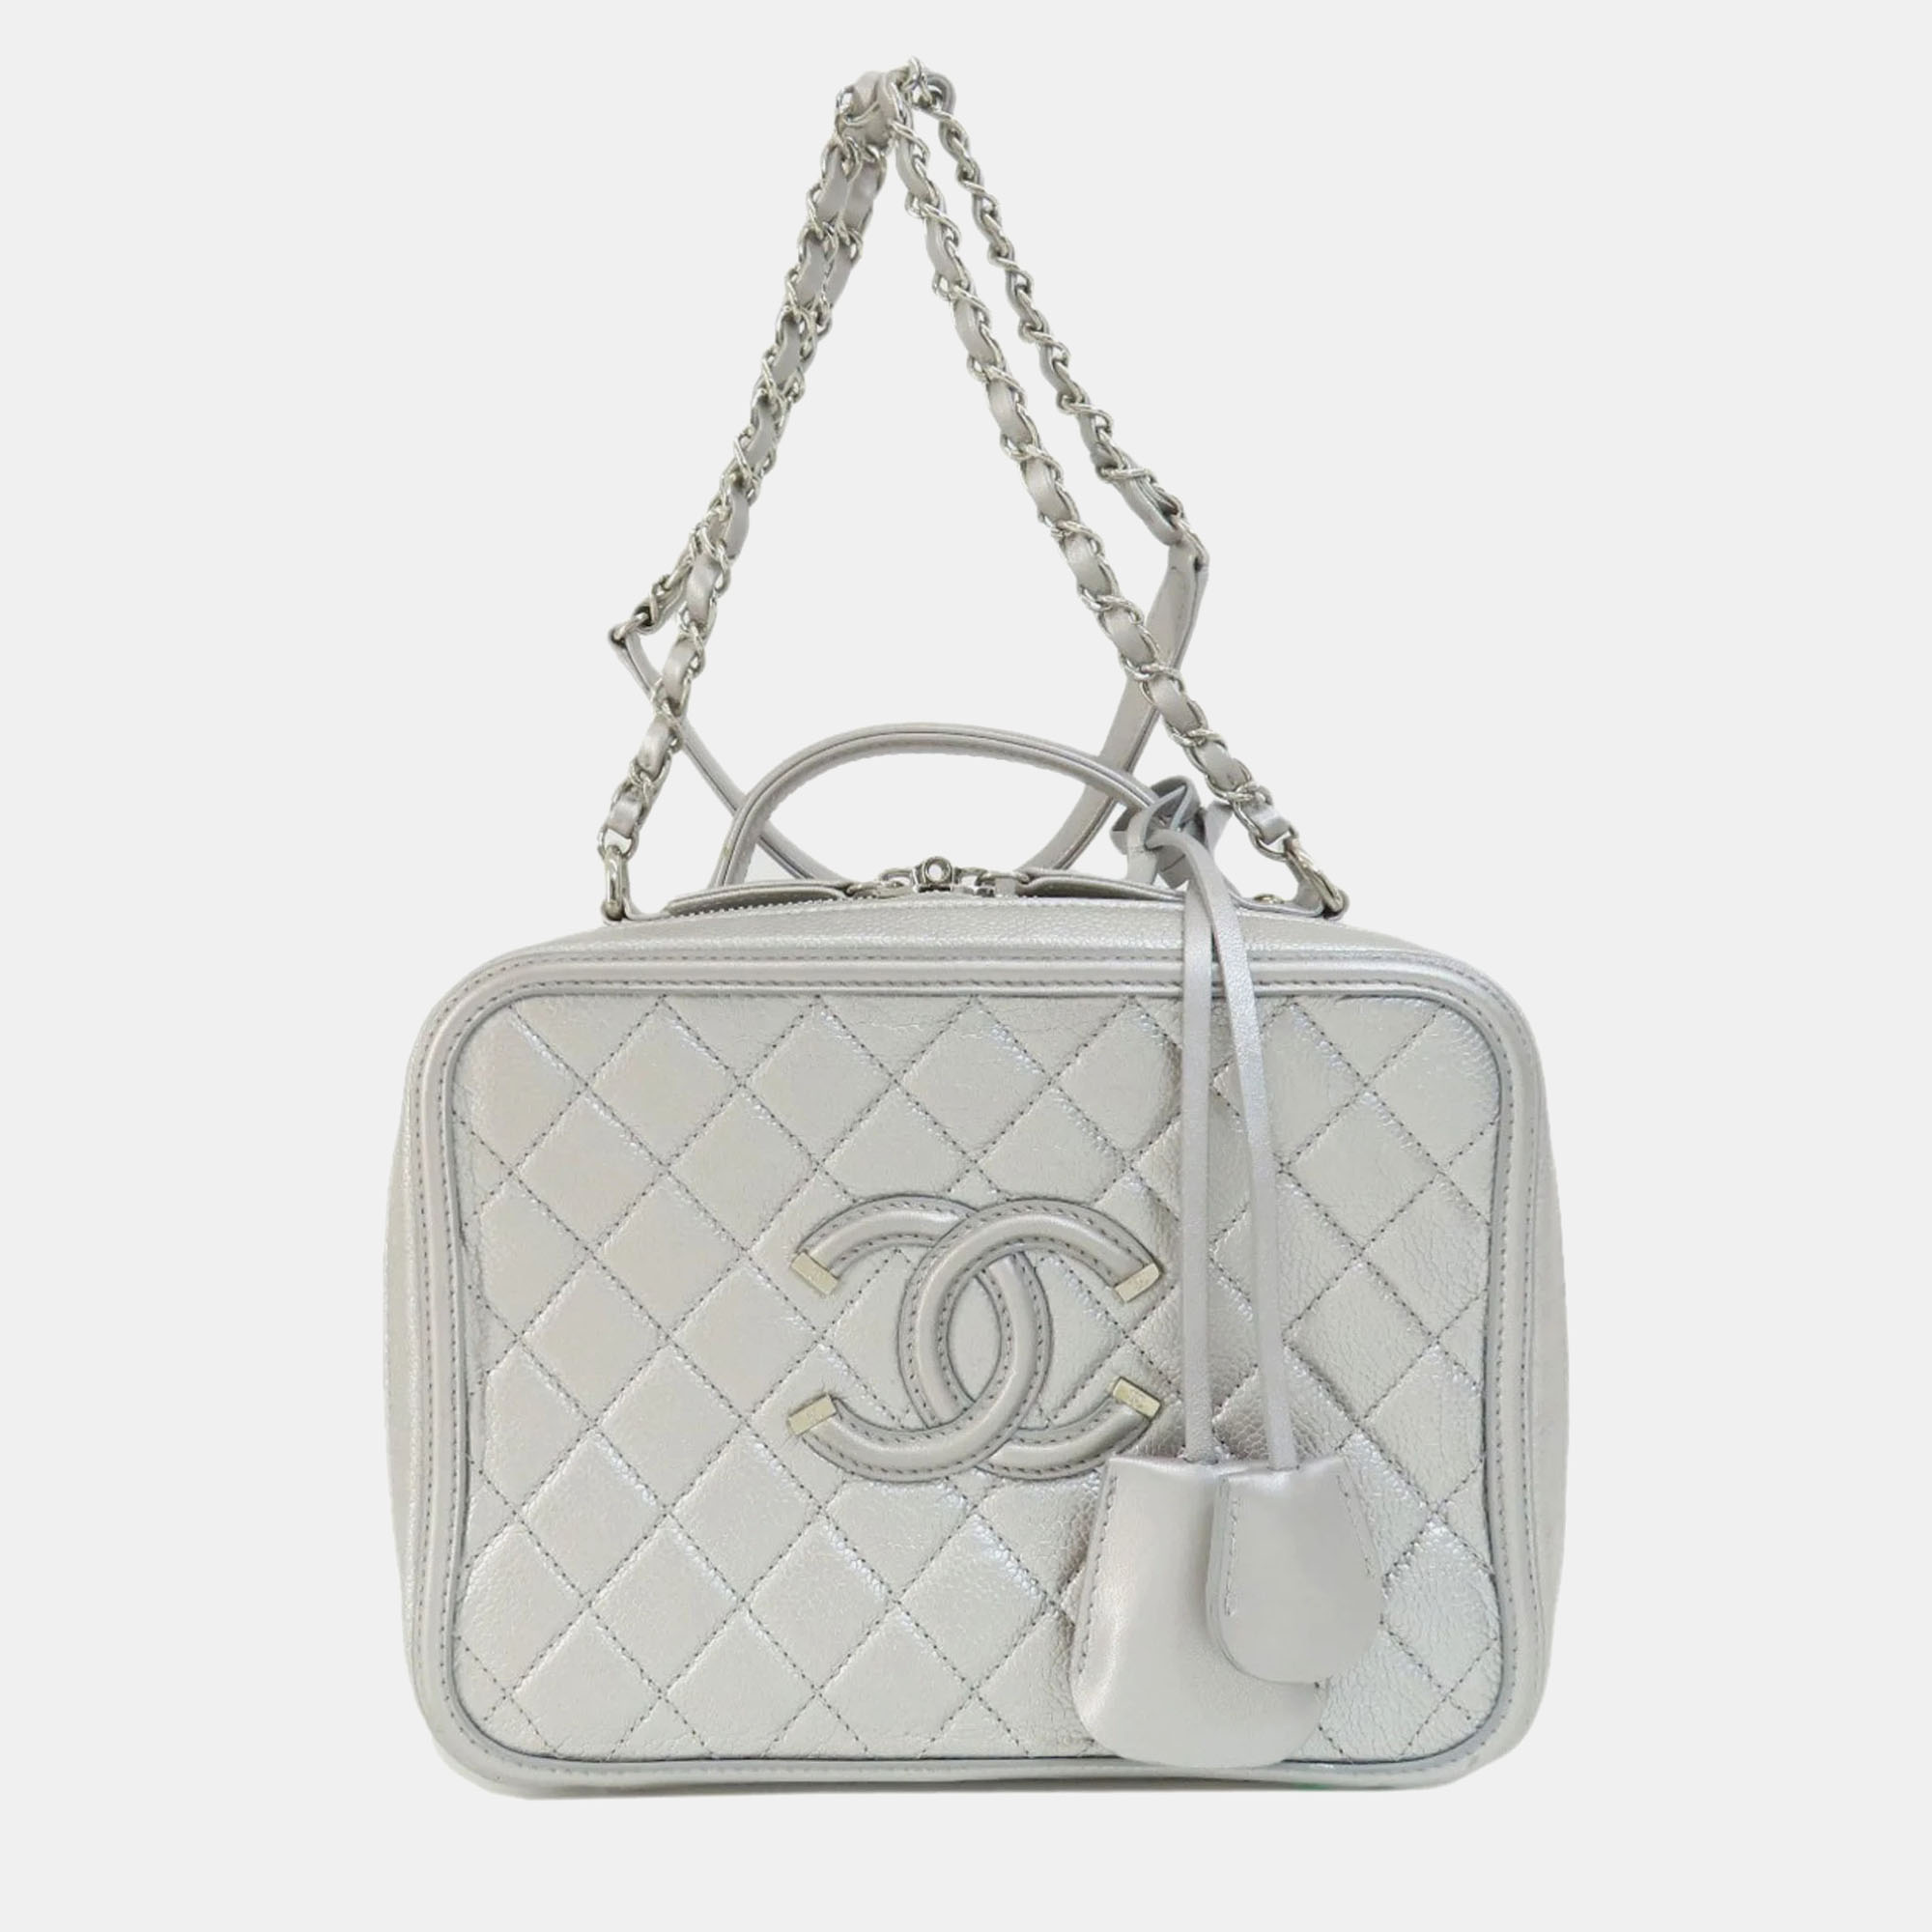 

Chanel Silver Metallic Caviar Quilted Large CC Filigree Vanity Case Shoulder Bag